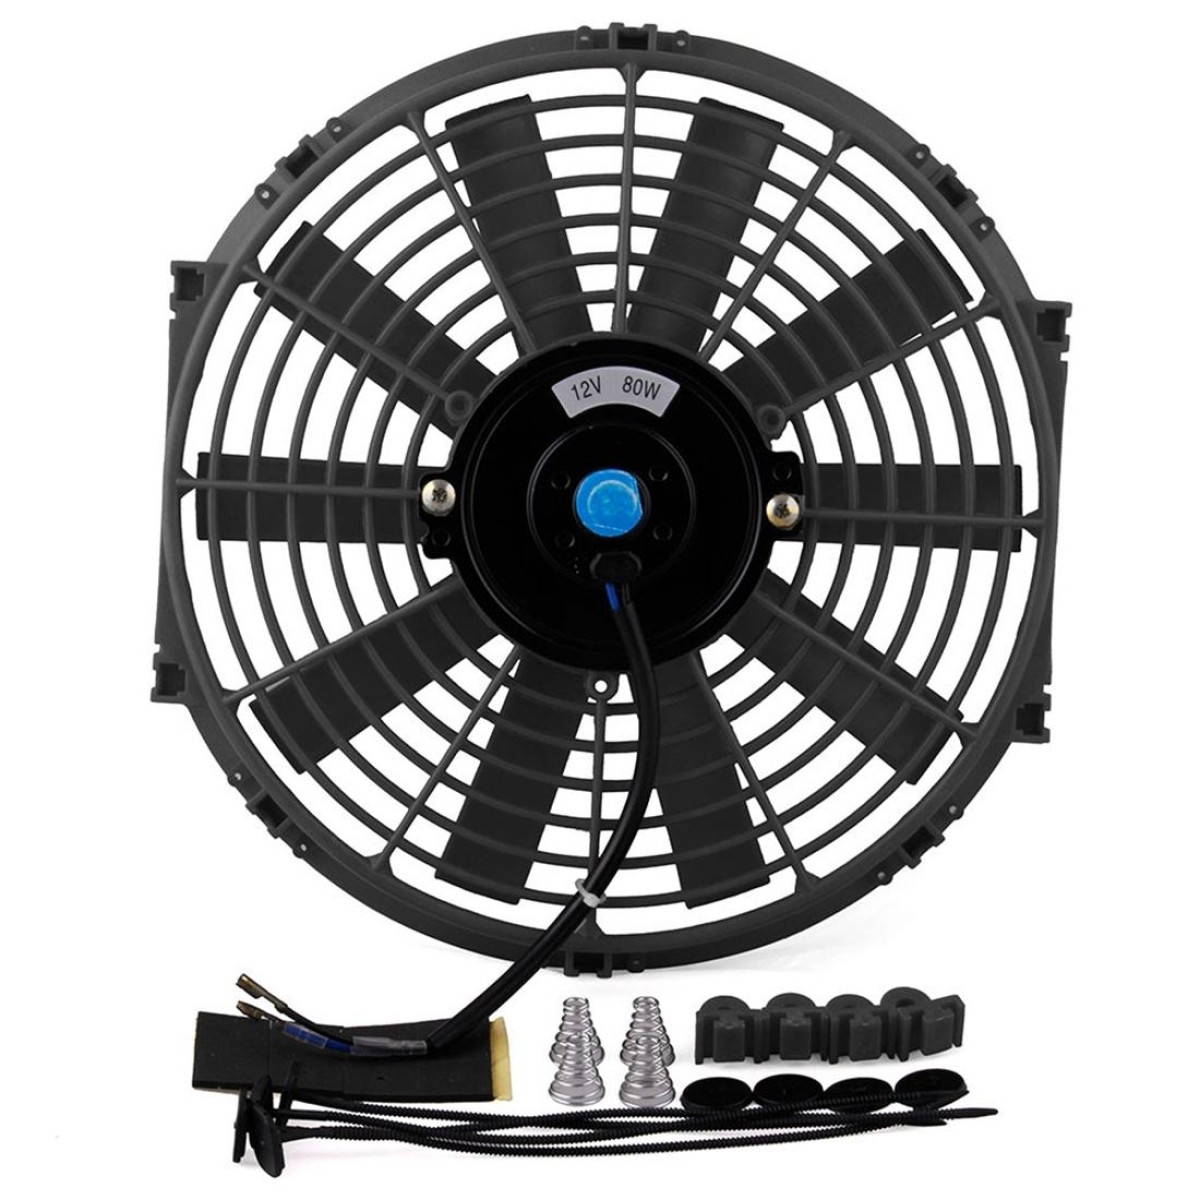 12V 80W 12 inch Car Cooling Fan High-power Modified Tank Fan Cooling Fan Powerful Auto Fan Mini Air Conditioner for Car(Black)